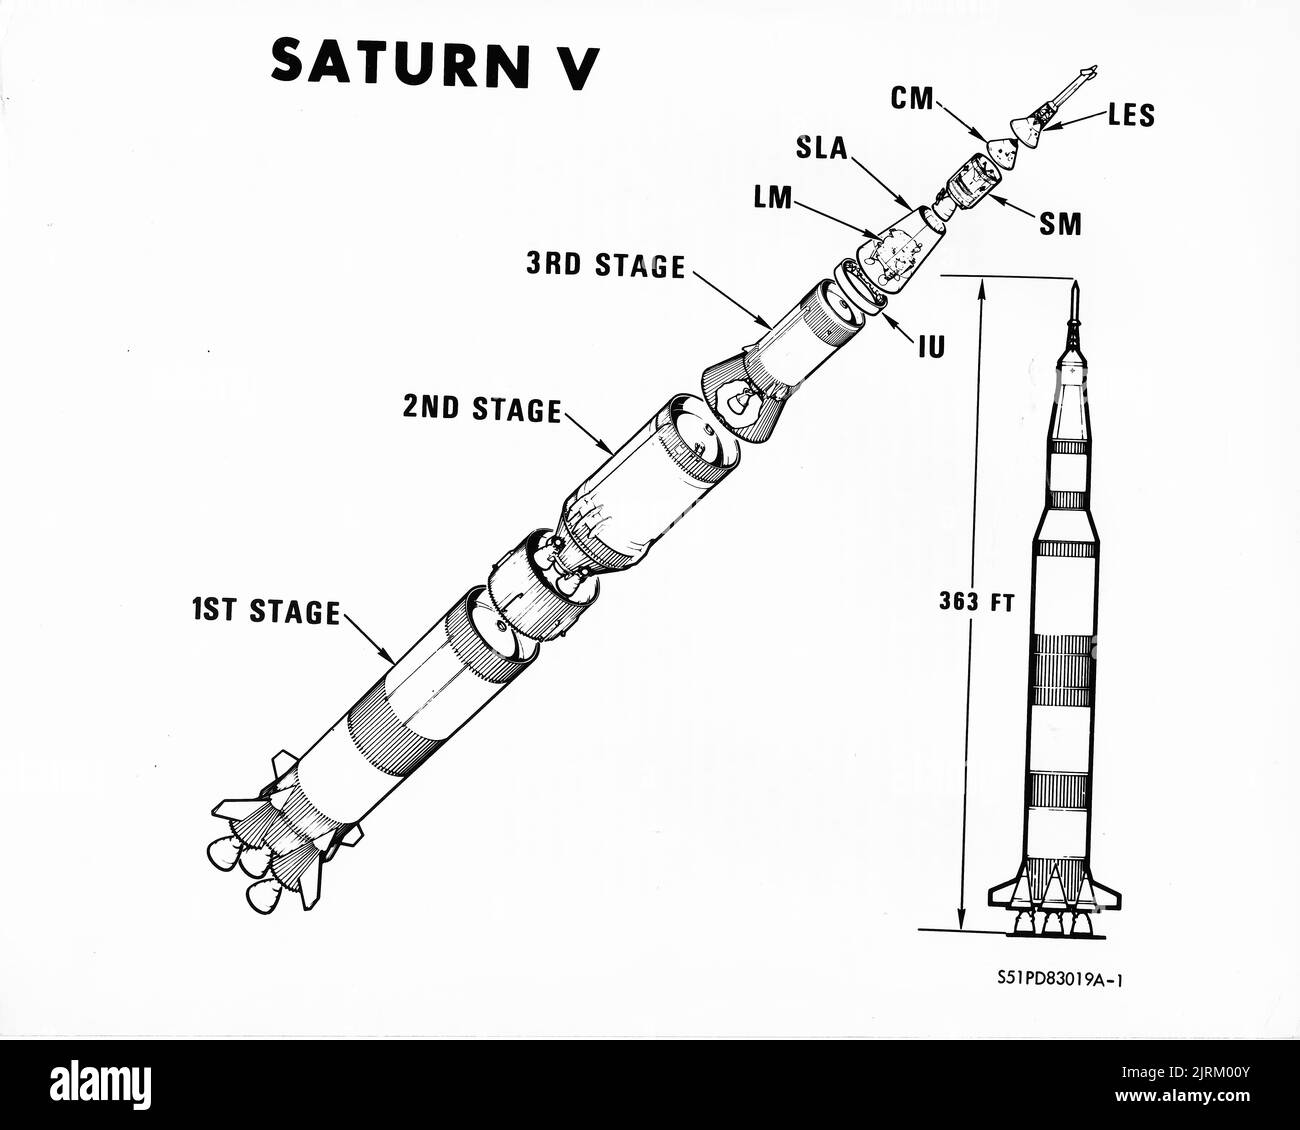 Teile des Saturn V Launch Vehicle ab 1. Juli 1971 â die erste Stufe (S-IC) des Saturn V wird von der Boeing Company in der Michoud Assembly Facility der NASA, New Orleans, Louisiana, gebaut. Die fünf P-l-Motoren der Stufe entwickeln beim Start insgesamt rund 7,6 Millionen Pfund Schub. Hauptkomponenten der Bühne sind die Vorwärtsschürze, der Oxidationstank, die Zwischentank-Struktur, der Kraftstofftank und die Schubstruktur. Das Treibmittel zu den fünf Motoren fließt normalerweise mit einer Geschwindigkeit von 29.364,5 Pfund (3.400 Gallonen) pro Sekunde. Ein Motor ist starr auf der Mittellinie der Bühne montiert, die anderen vier Motoren sind montiert Stockfoto